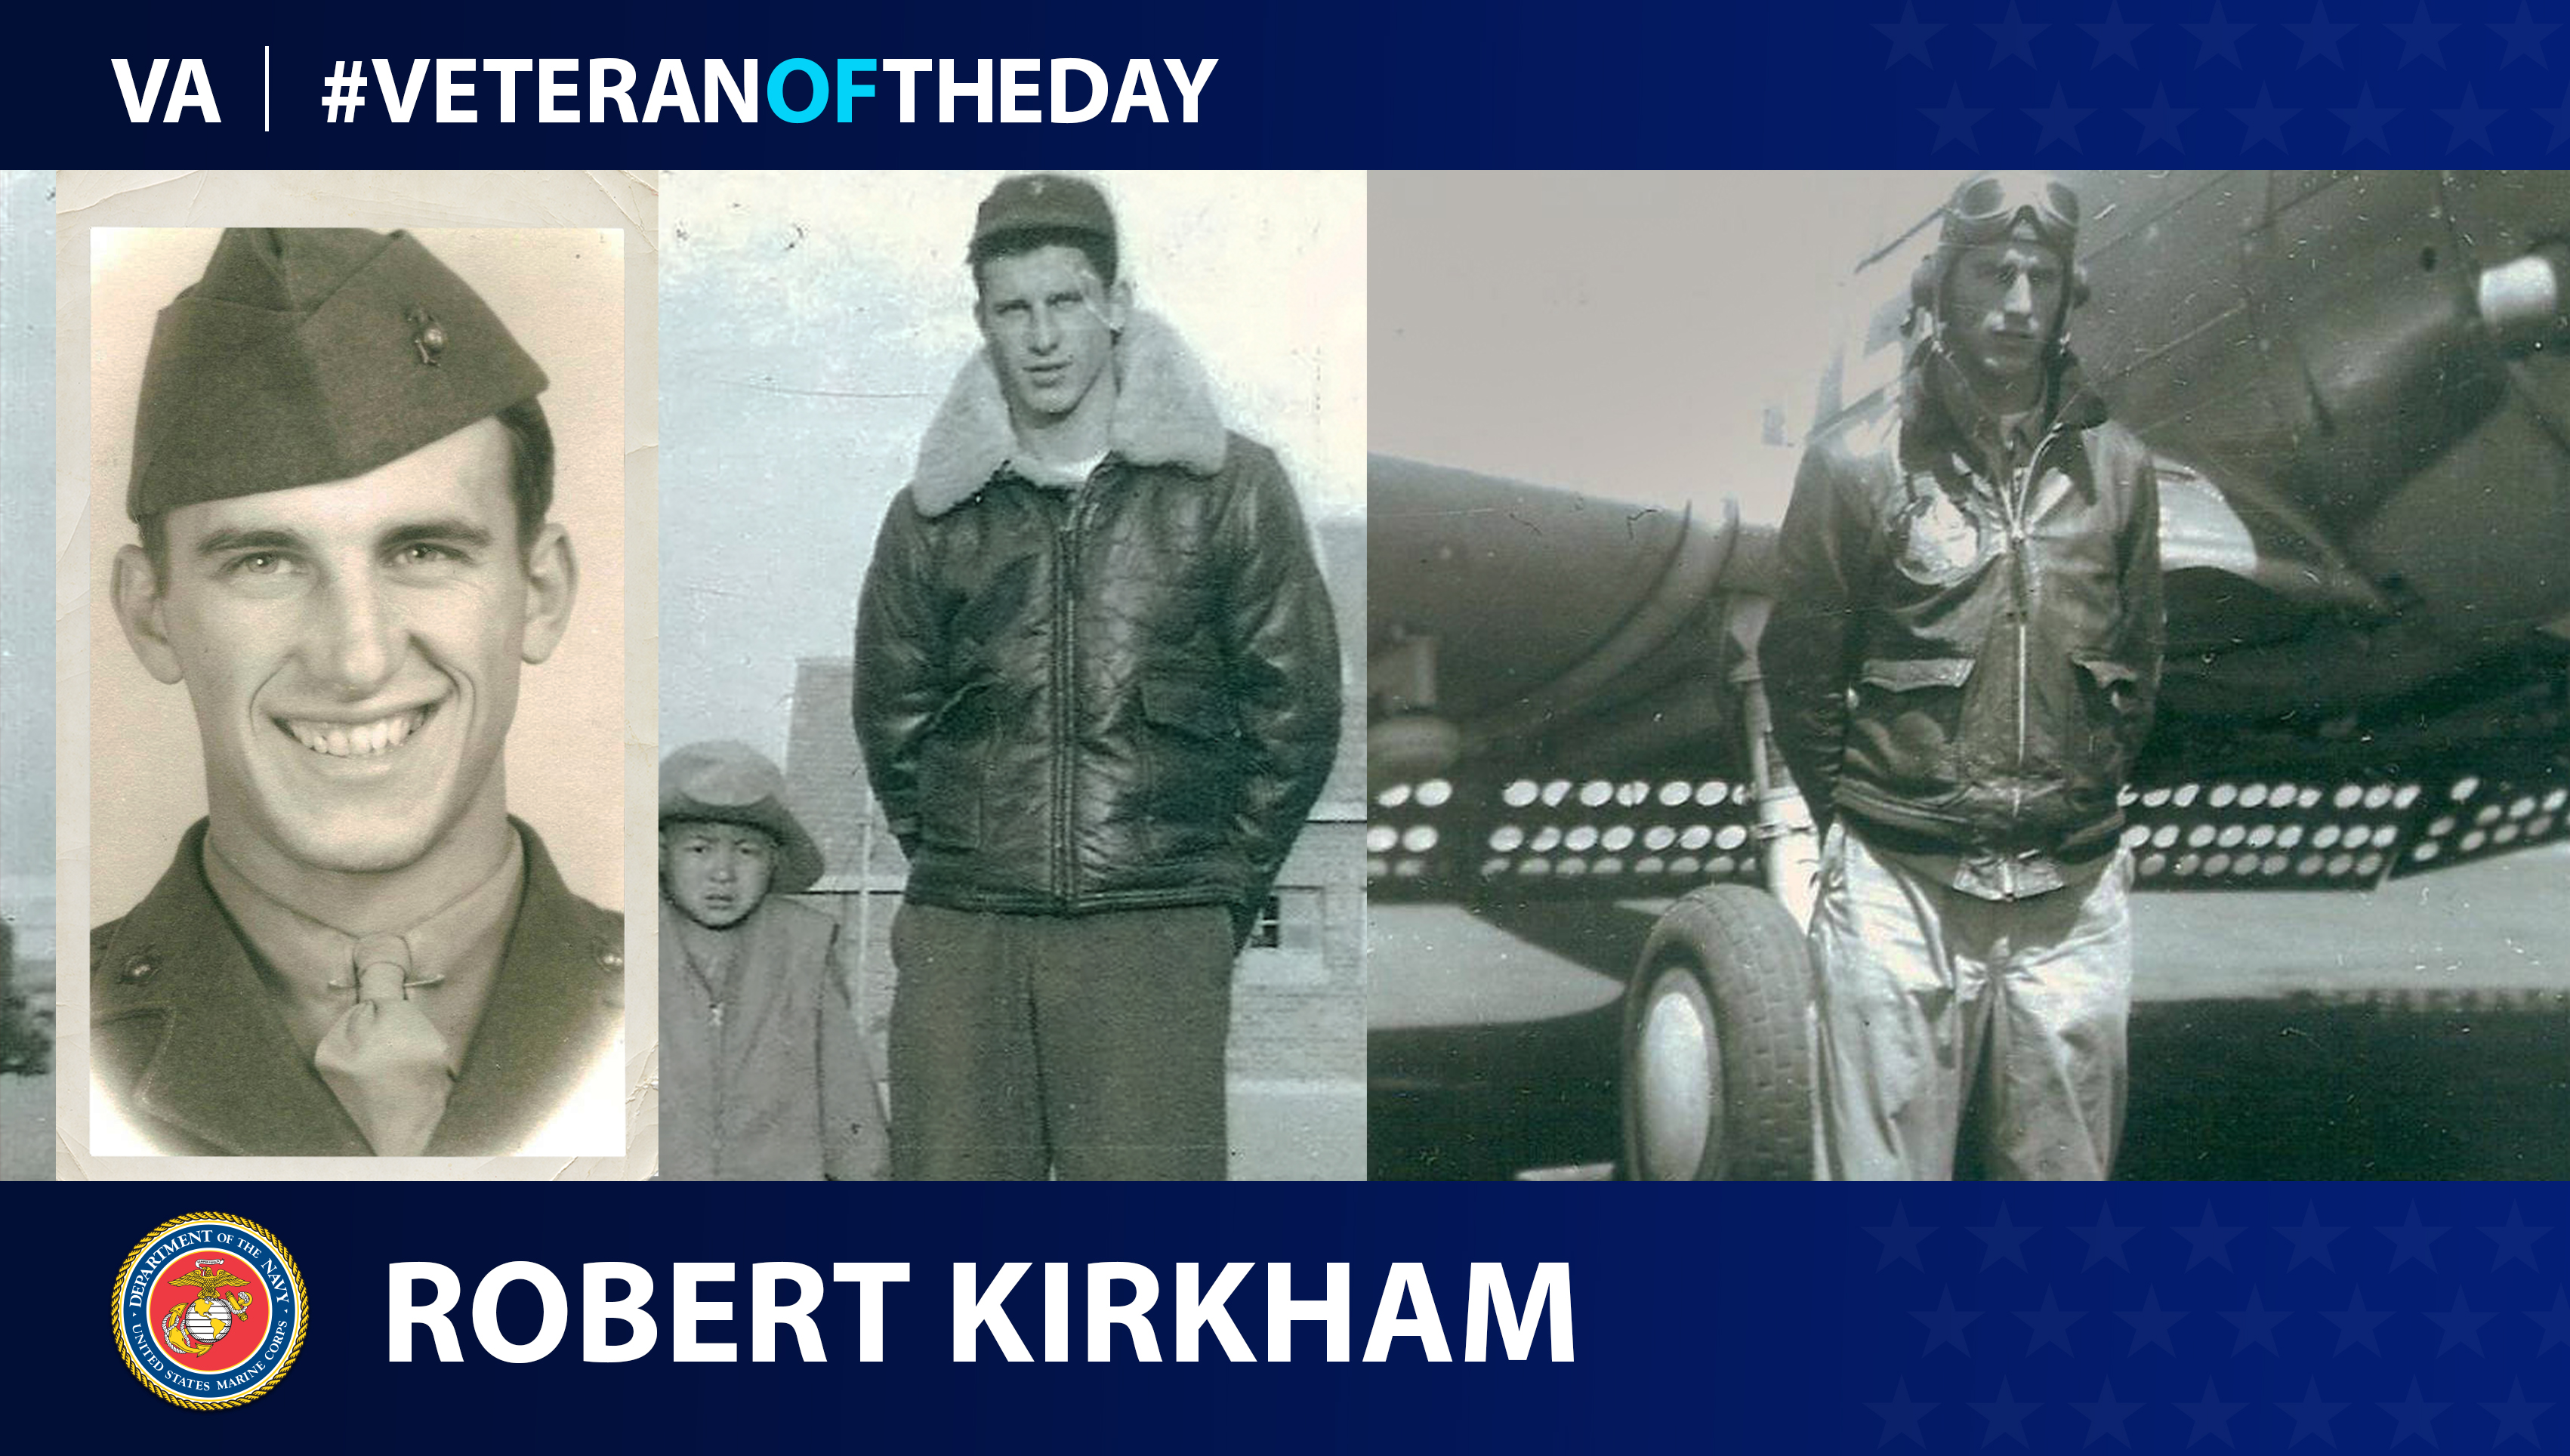 Marine Corps Veteran Robert Kirkham is today's Veteran of the day.